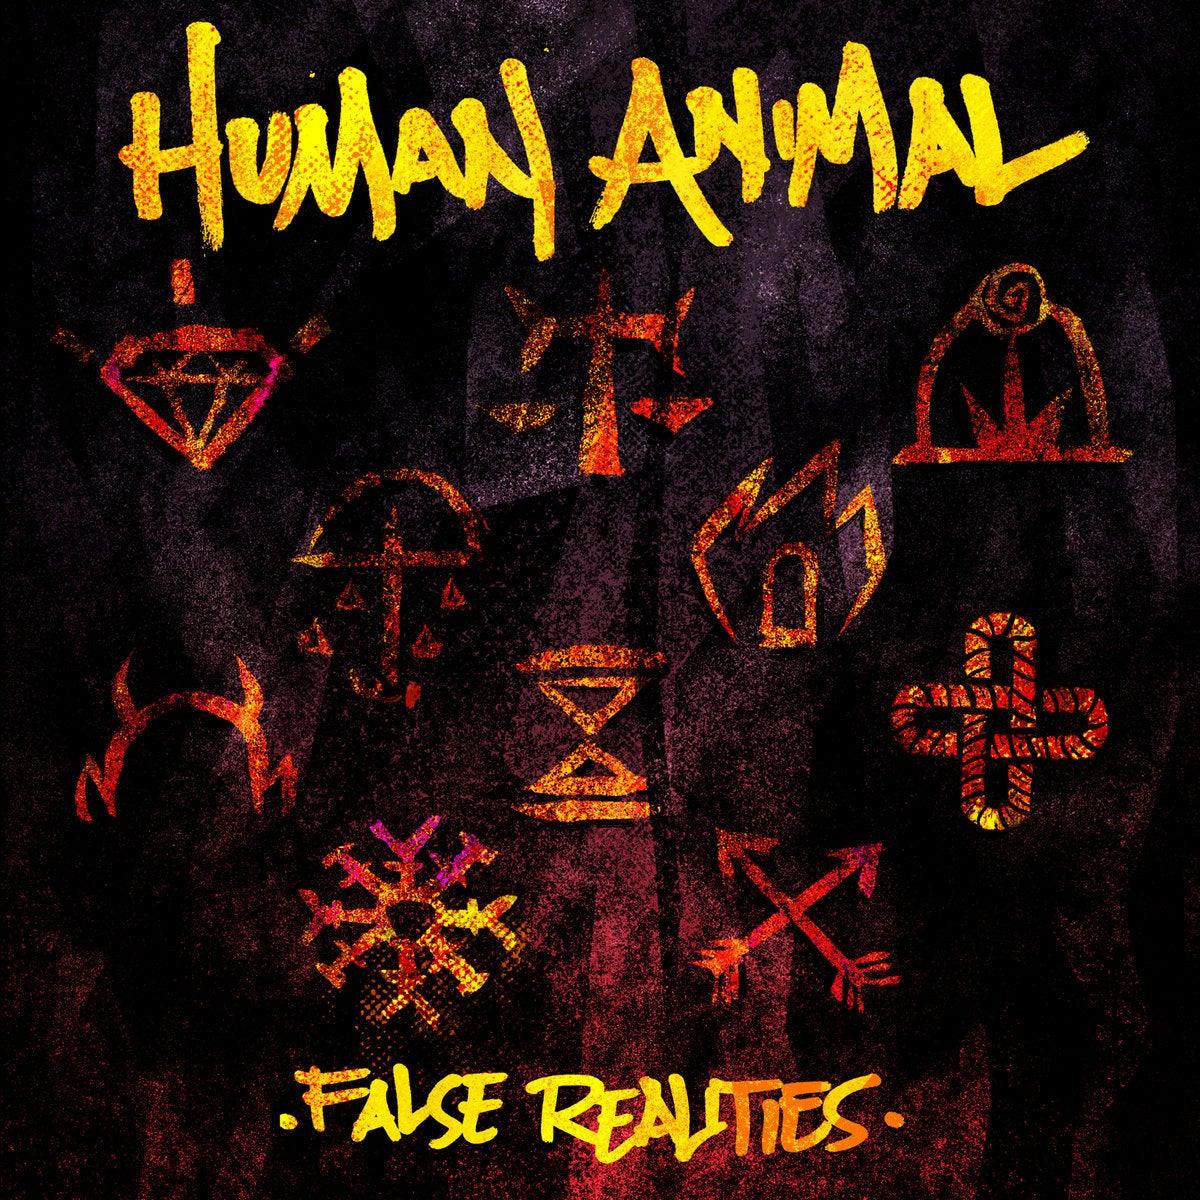 Buy – Human Animal "False Realities" 12" – Band & Music Merch – Cold Cuts Merch